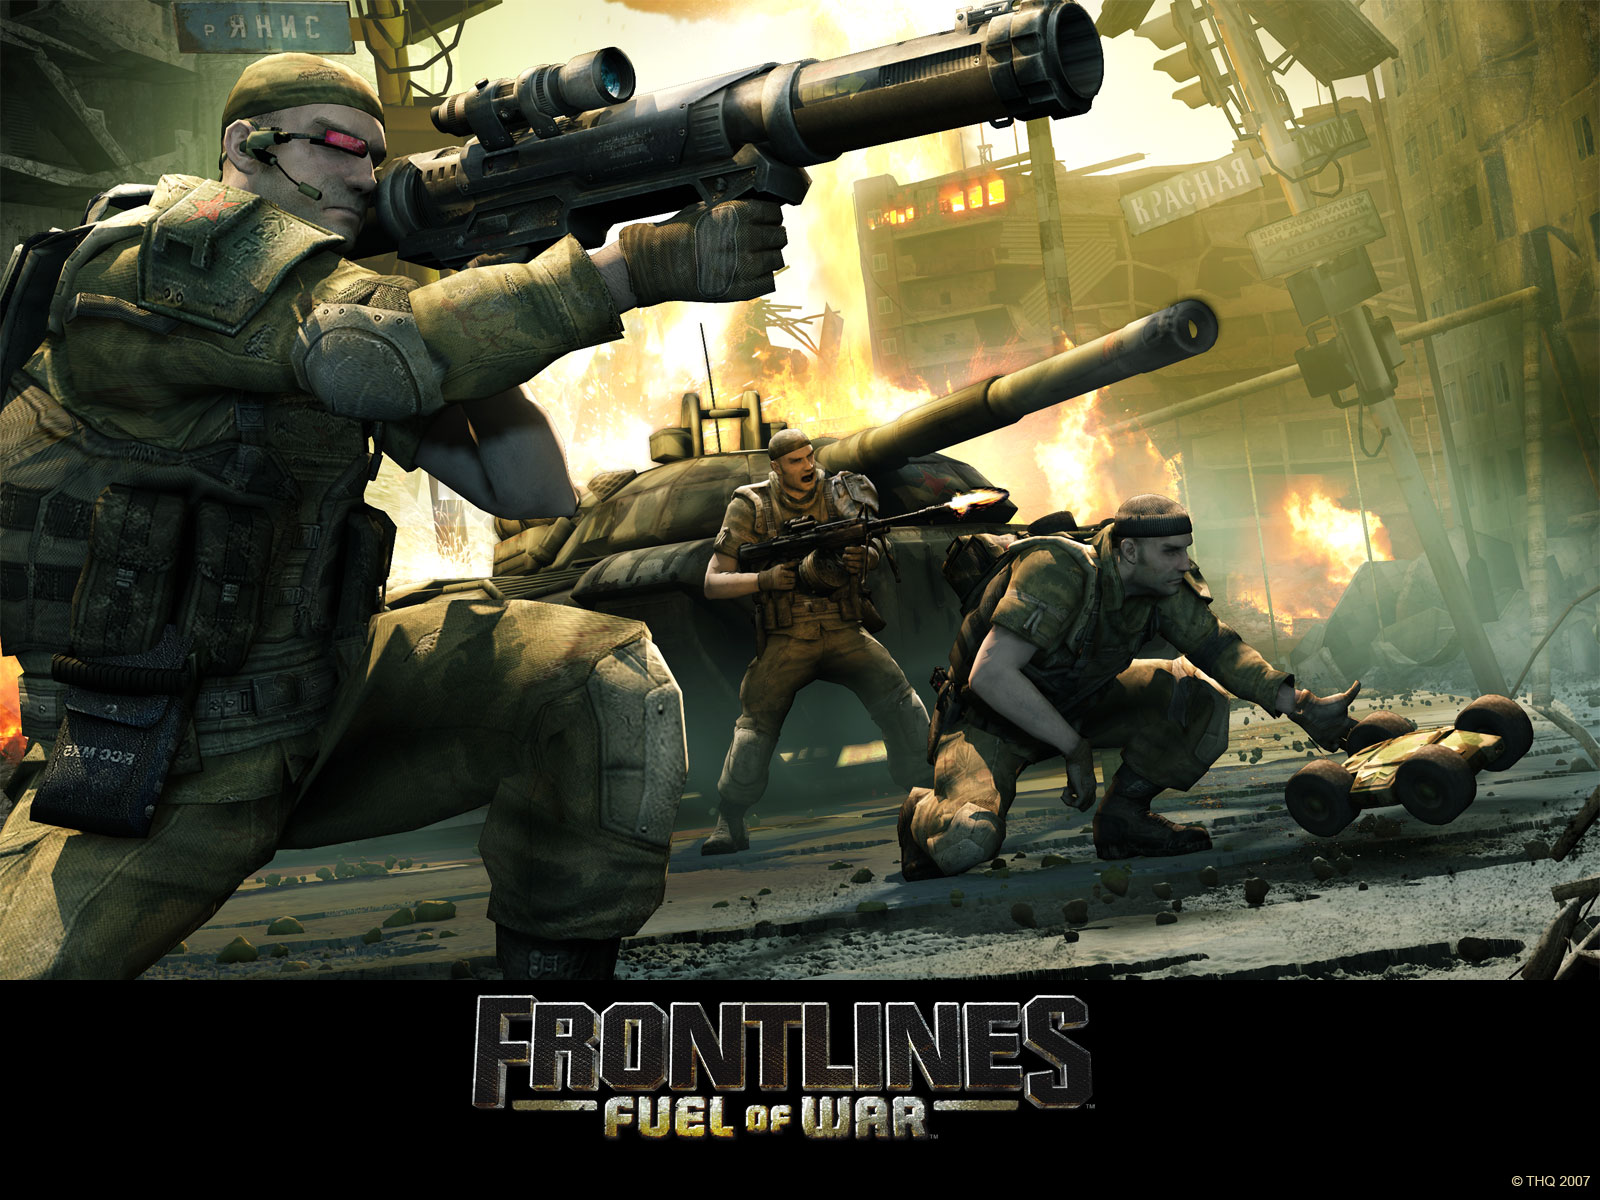 Download background video game, frontlines: fuel of war